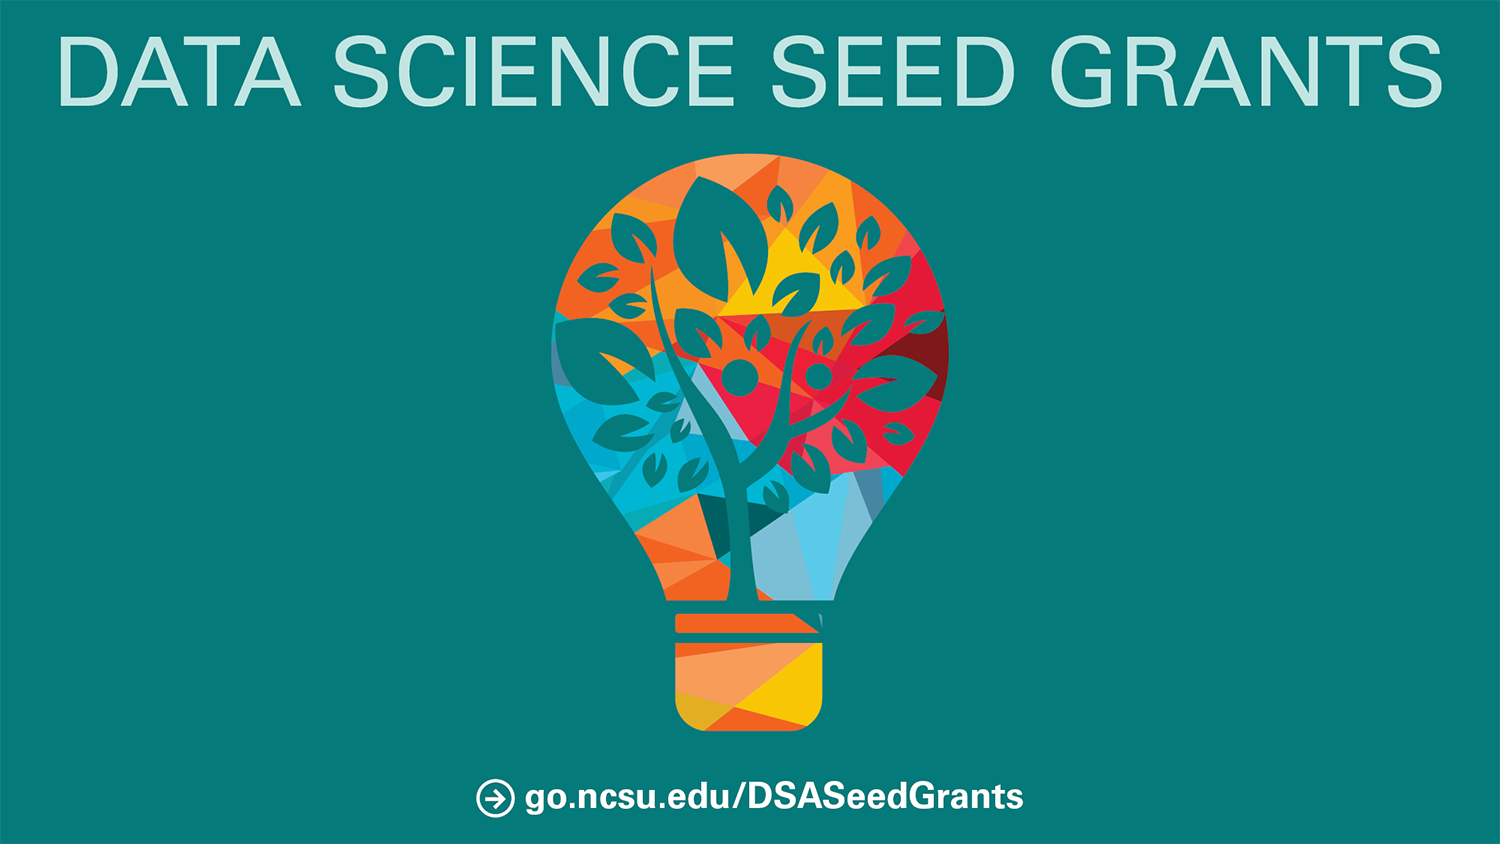 A colorful lightbulb on a teal background. Text: Data Science Seed Grants. URL: go.ncsu.edu/DSASeedGrants